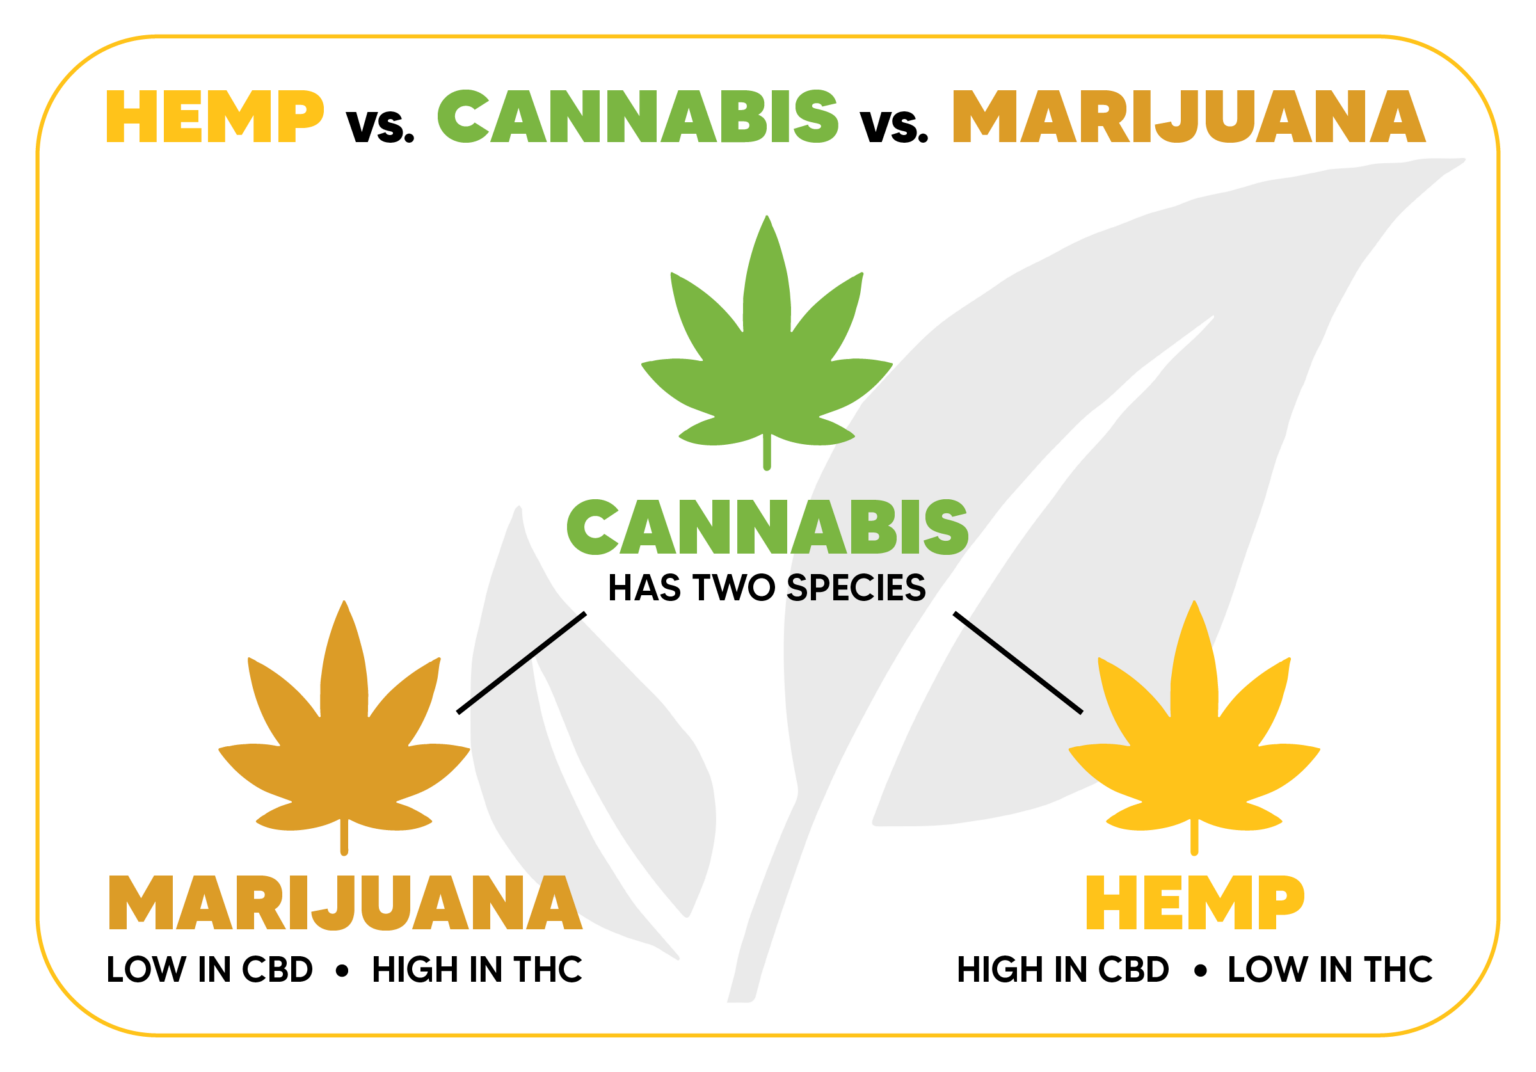 Hemp versus Cannabis versus Marijuana